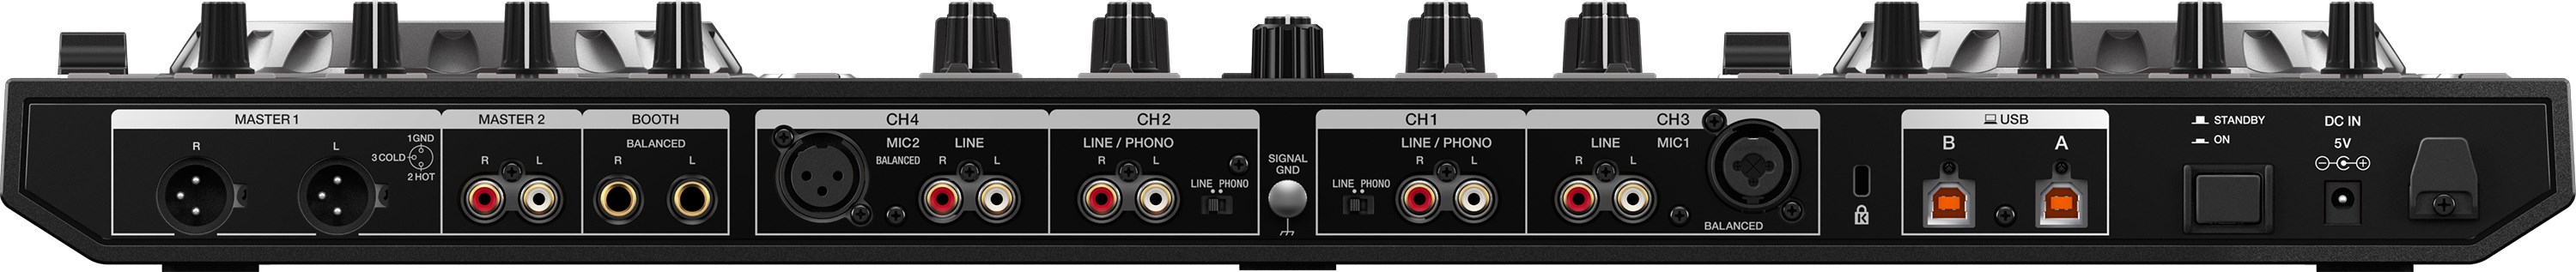 Pioneer Dj Ddj-sx3 - USB DJ-Controller - Variation 3